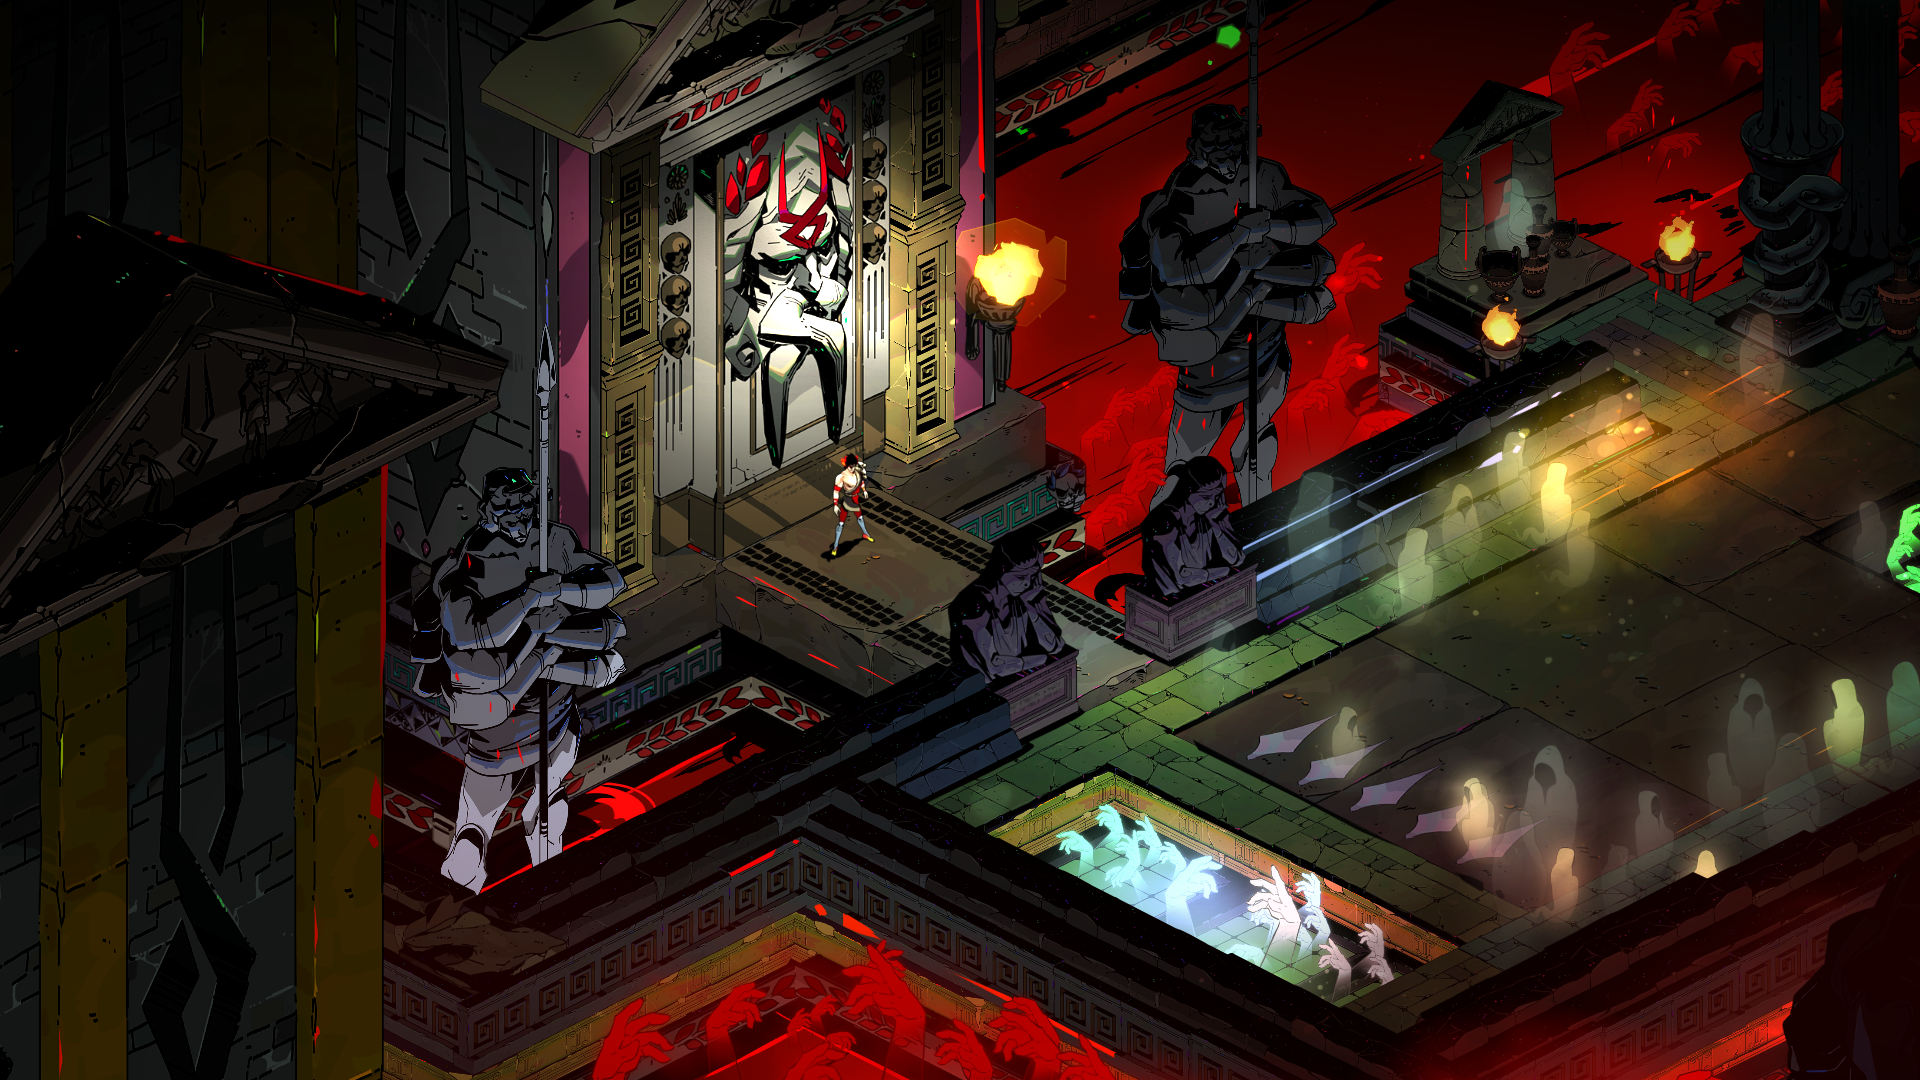 Hades | Developer: Supergiant Games